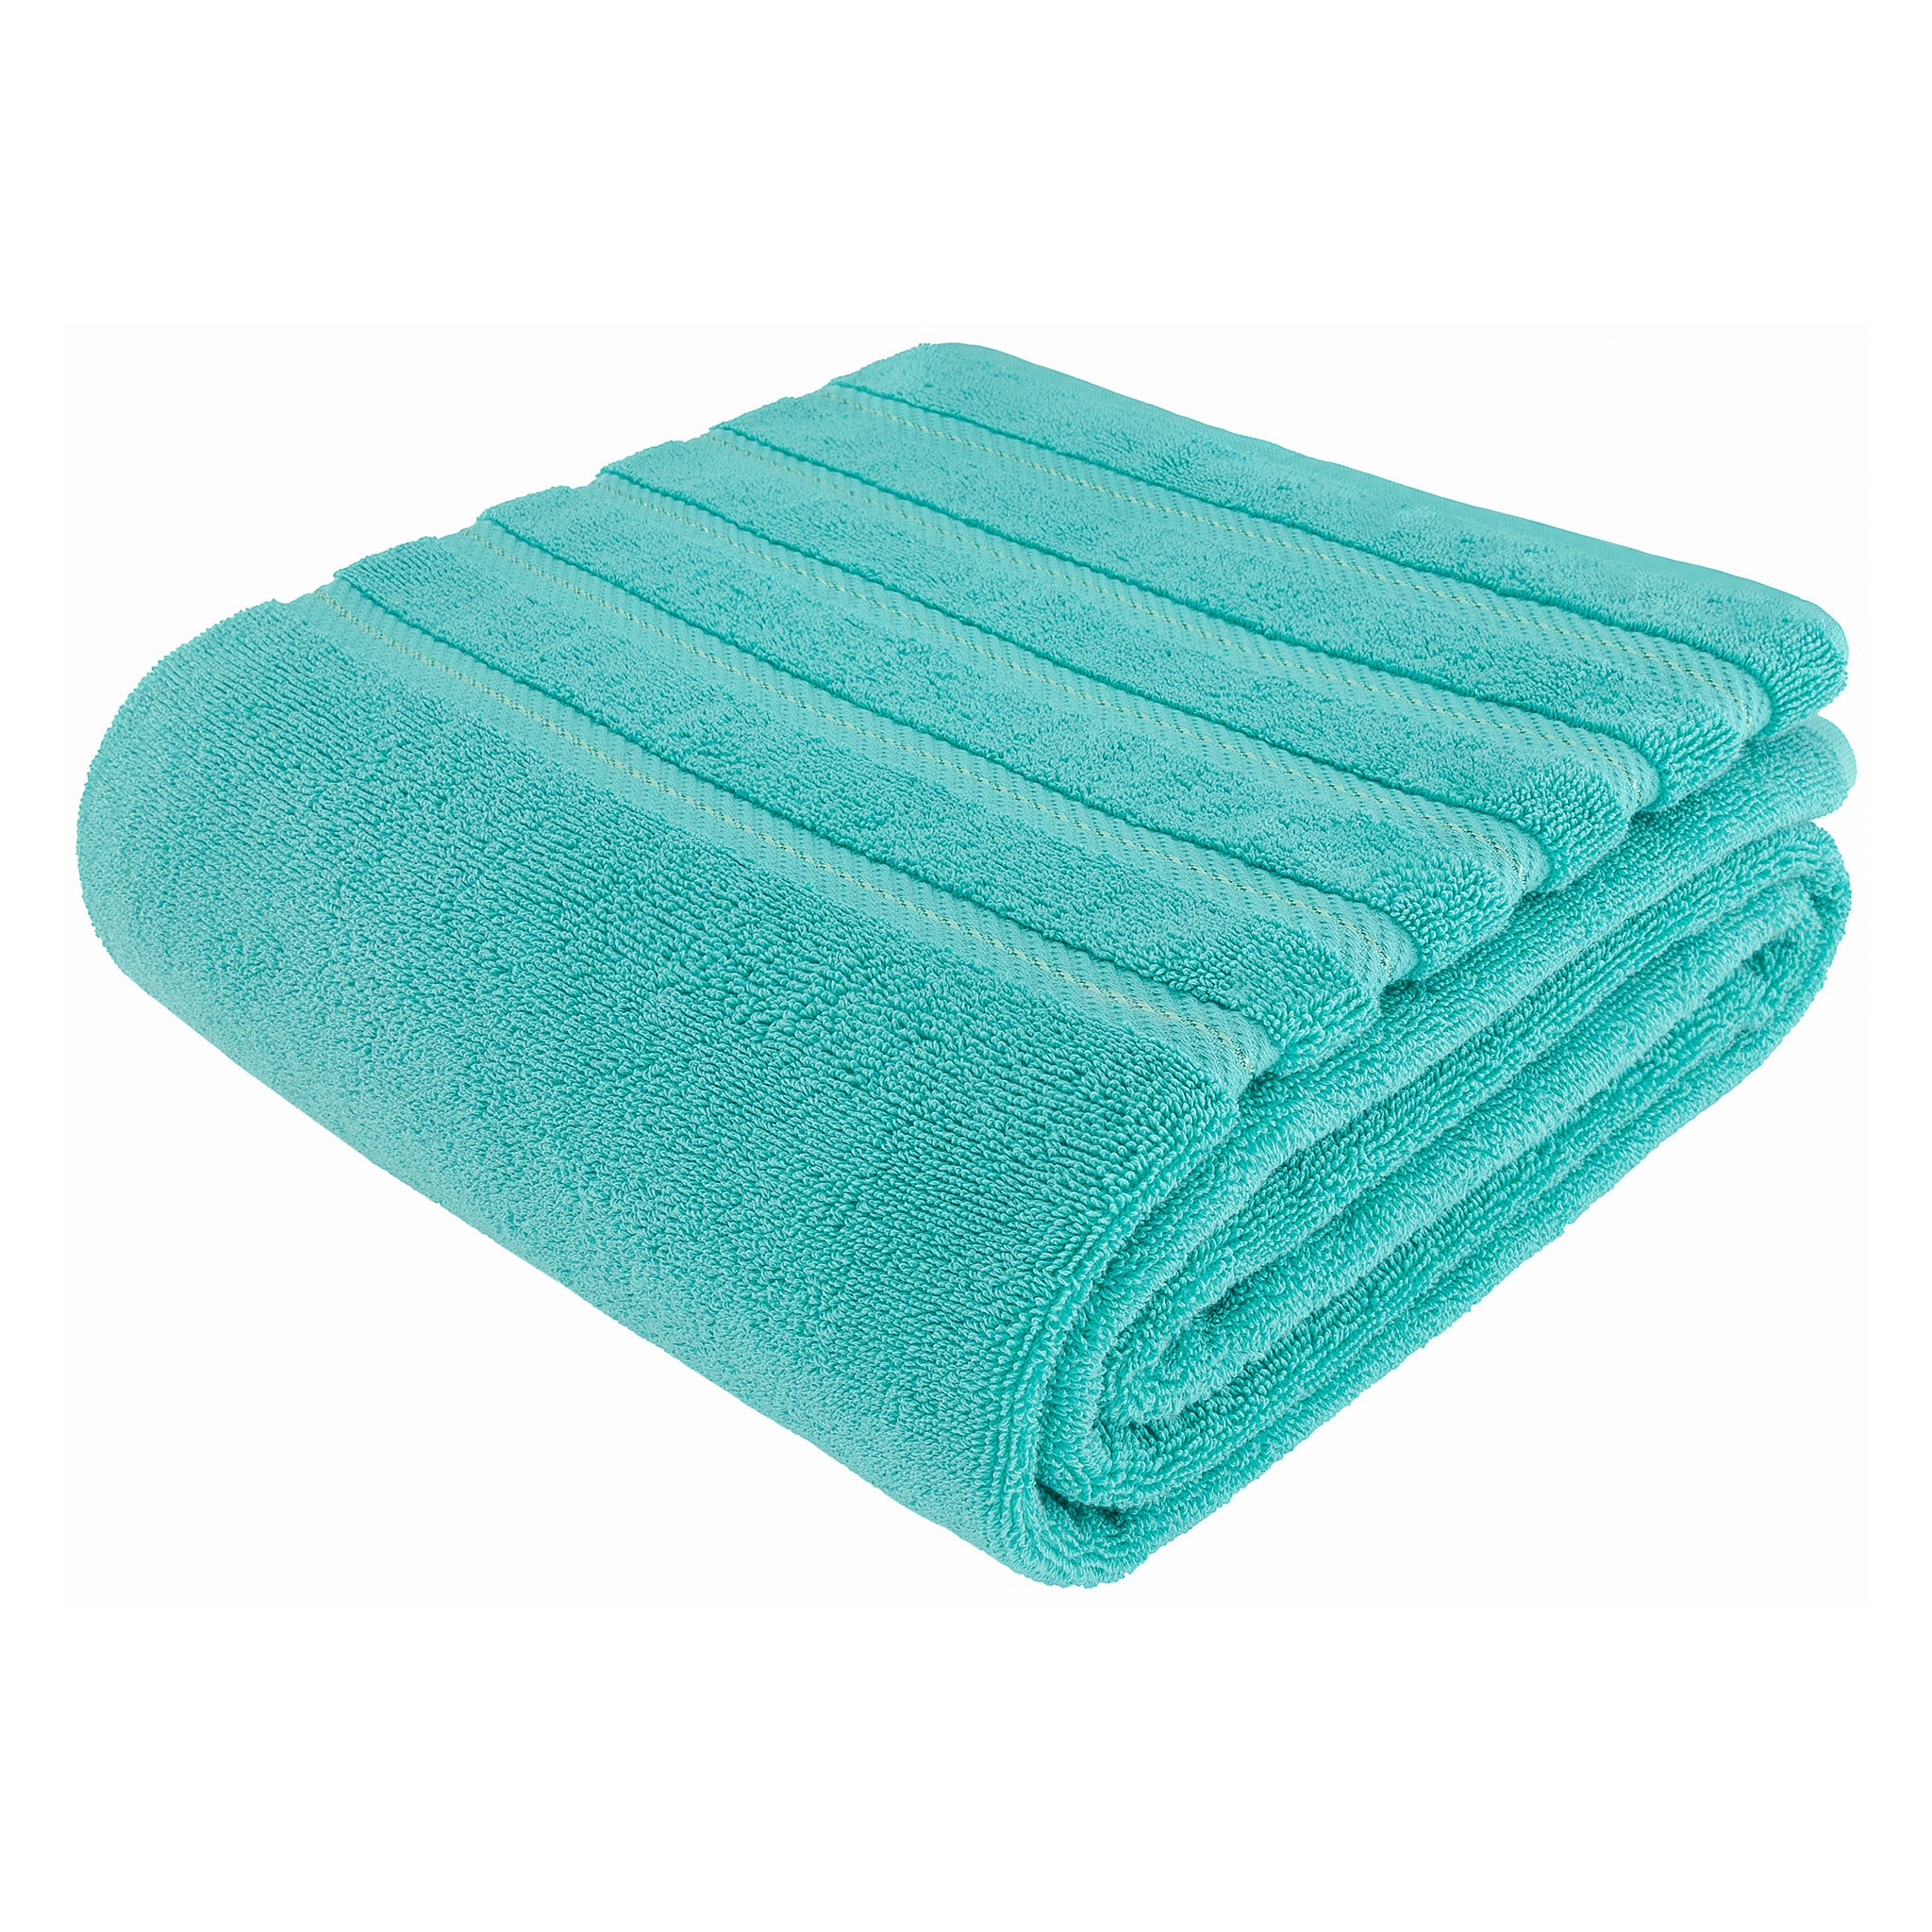 American Bath Towels Bath Sheets 40x80 Clearance, 100% Cotton Extra Large  Bath Towel, Oversized Turkish Bath Towel for Bathroom, Aqua Blue